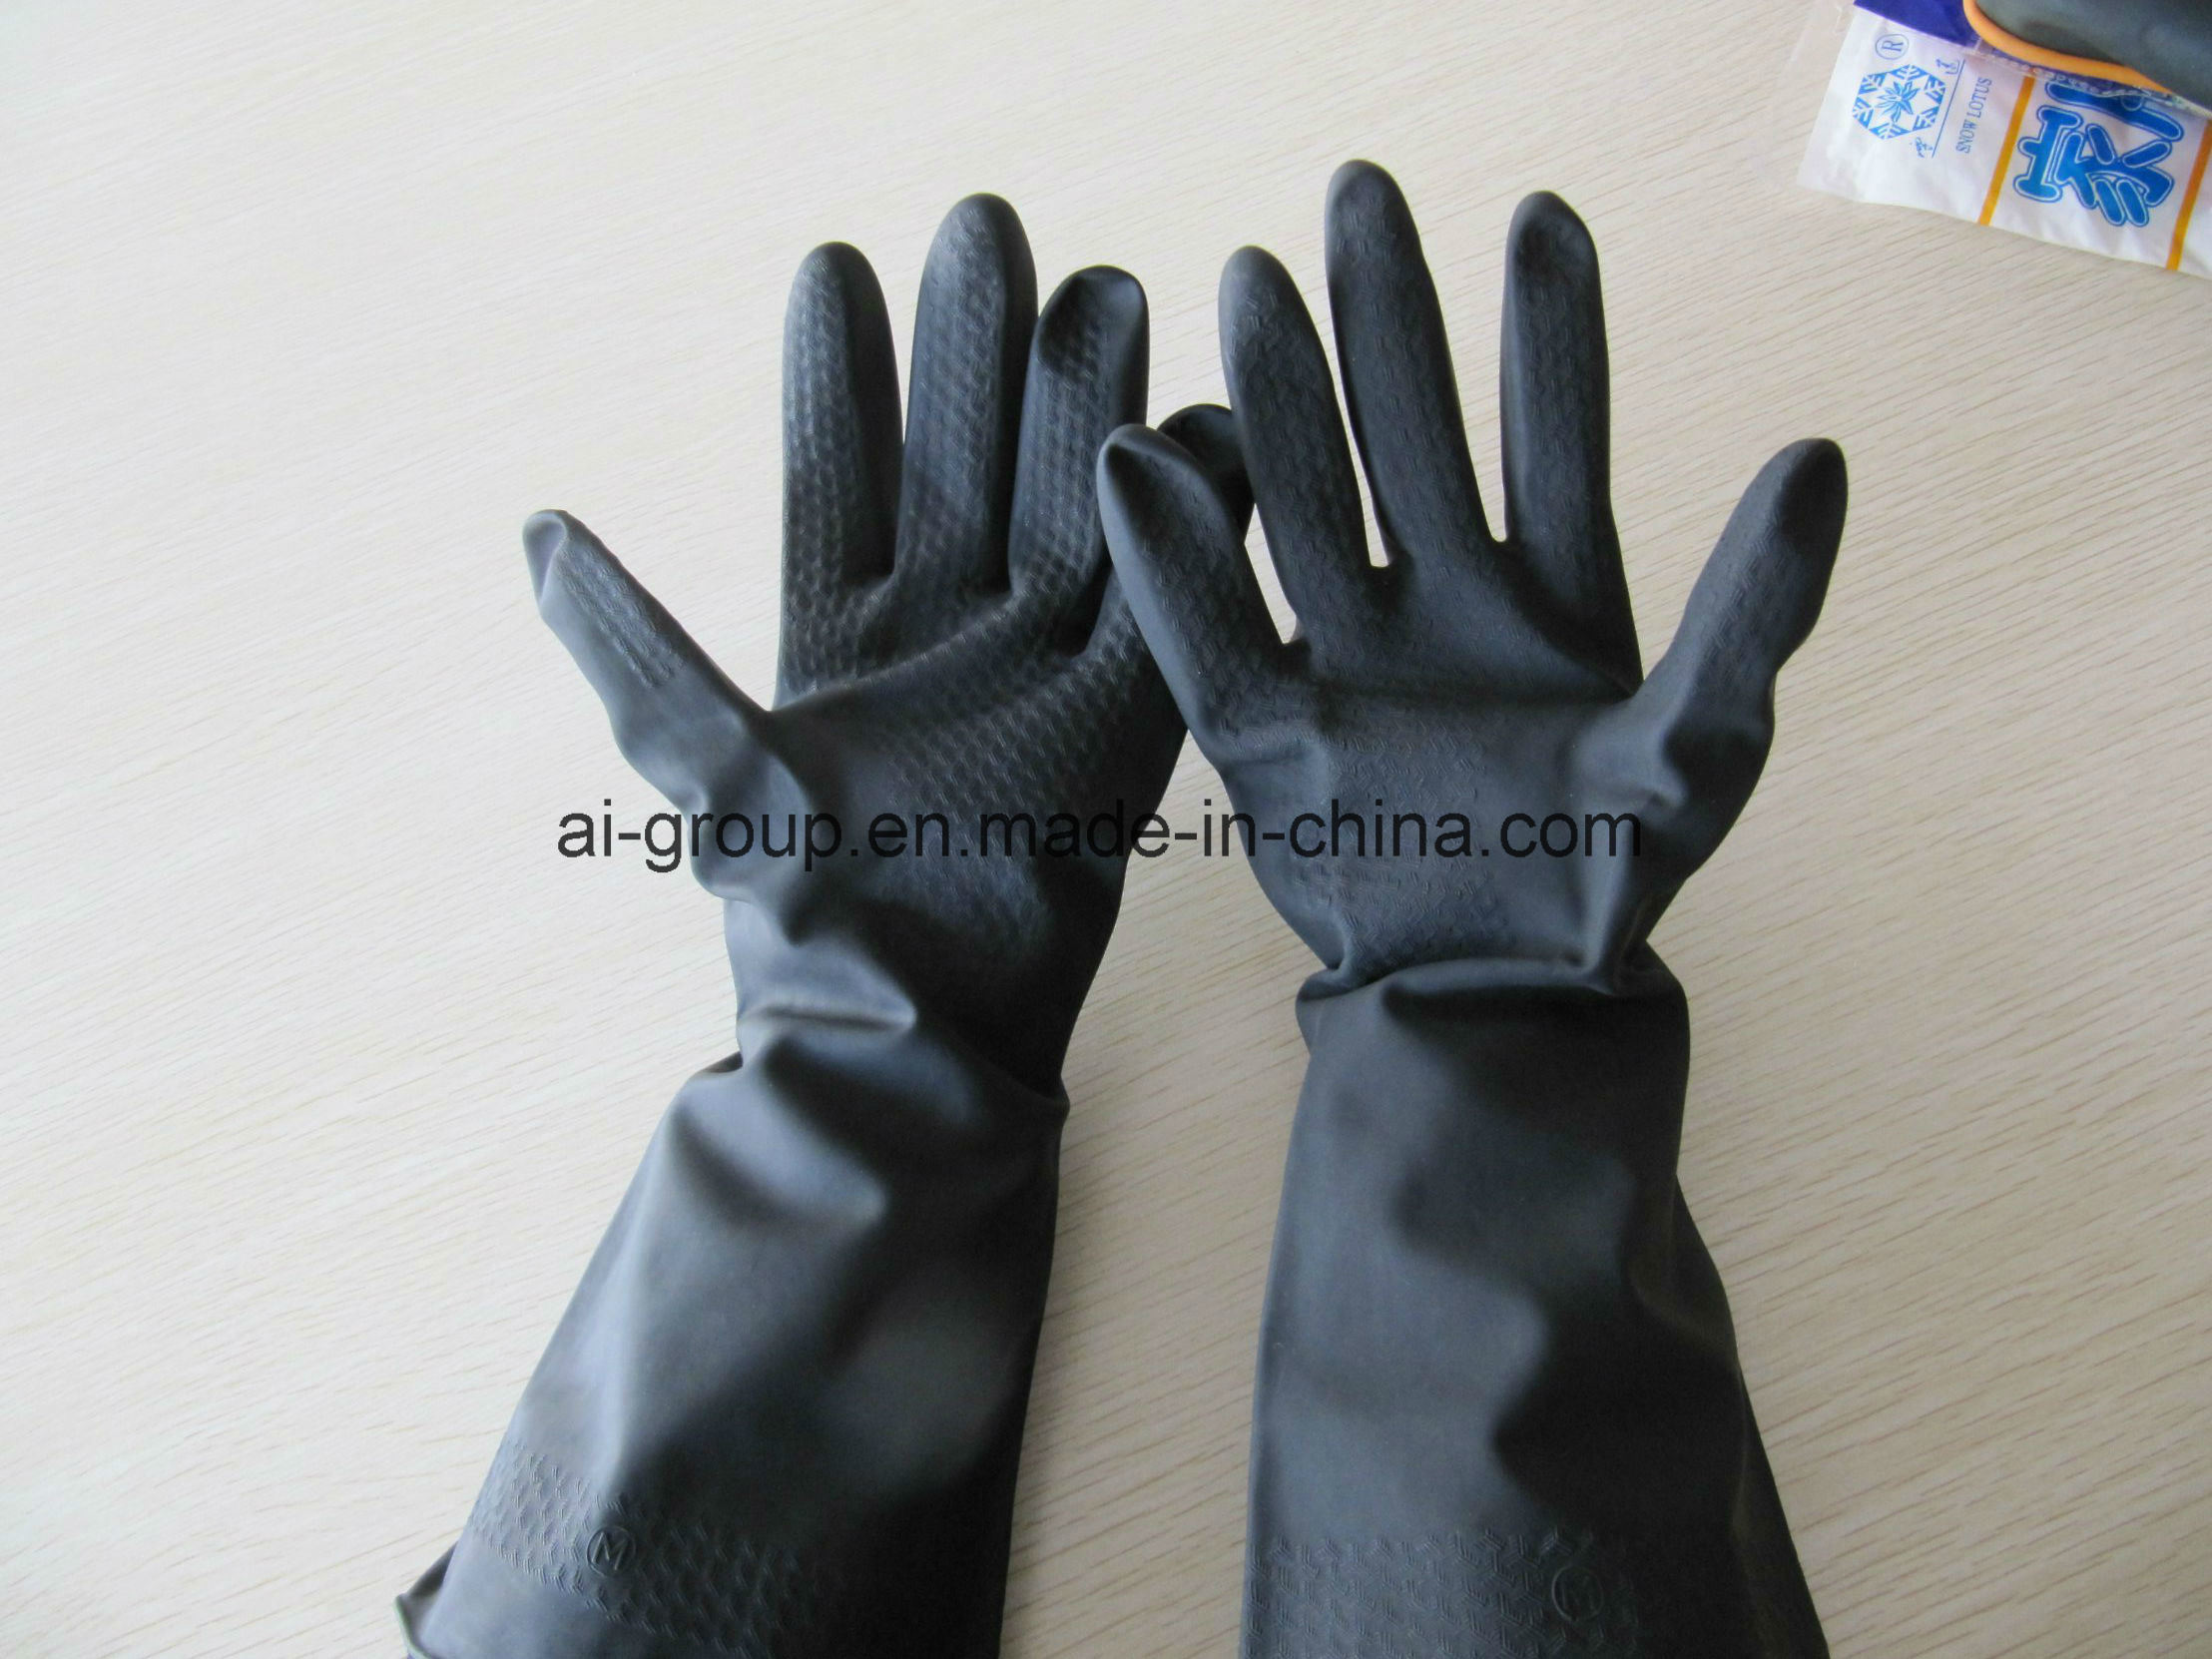 Household Long Working Waterproof Chemical Resistant Black Latex Industrial Glove (Natural rubber)